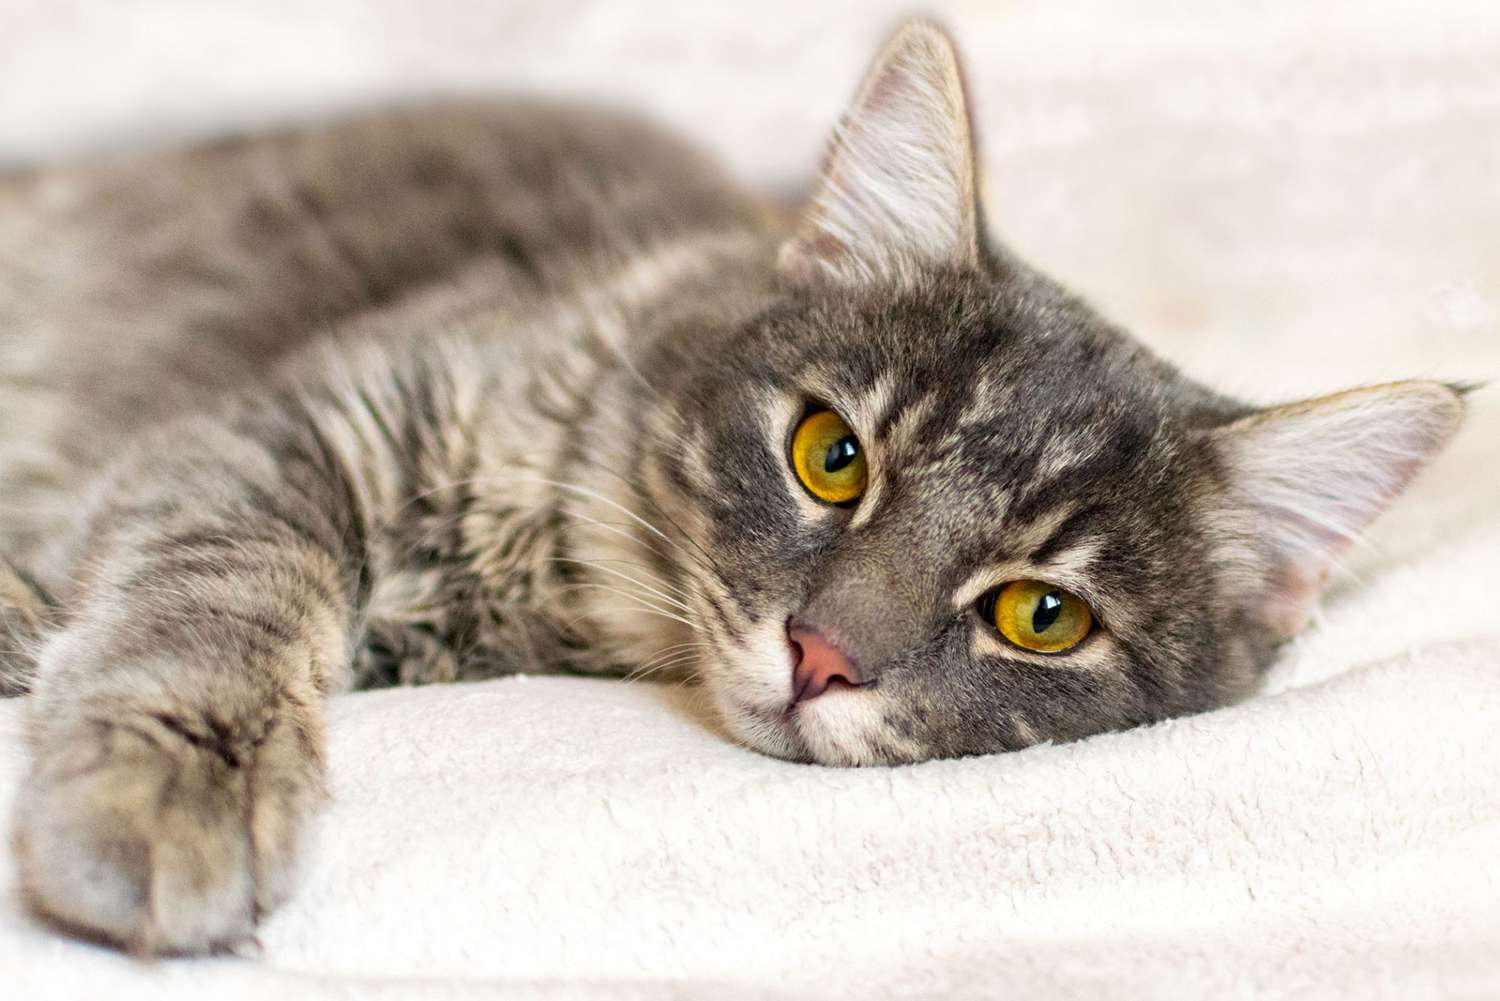 sad looking cat lying on blanket